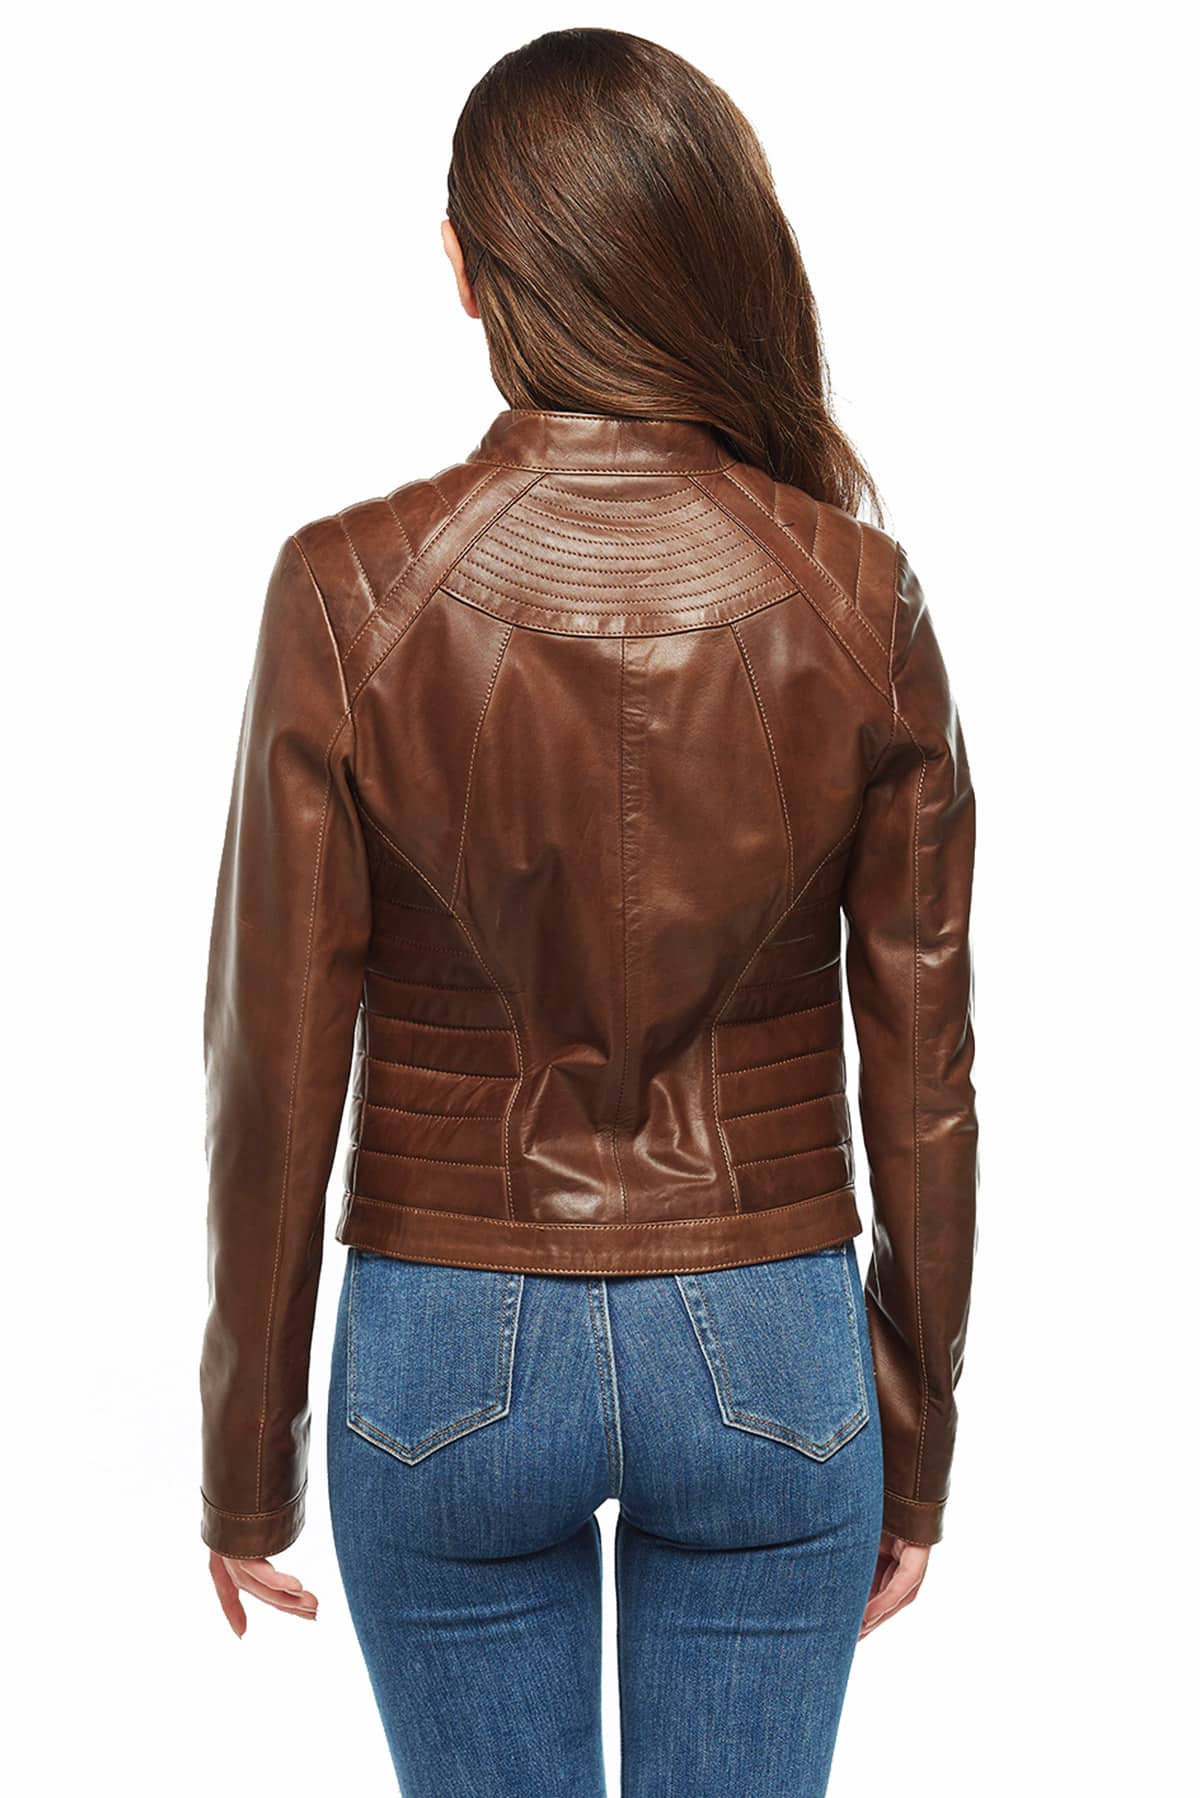 Mia Women’s Classic Brown Leather Jacket | Urban Fashion Studio